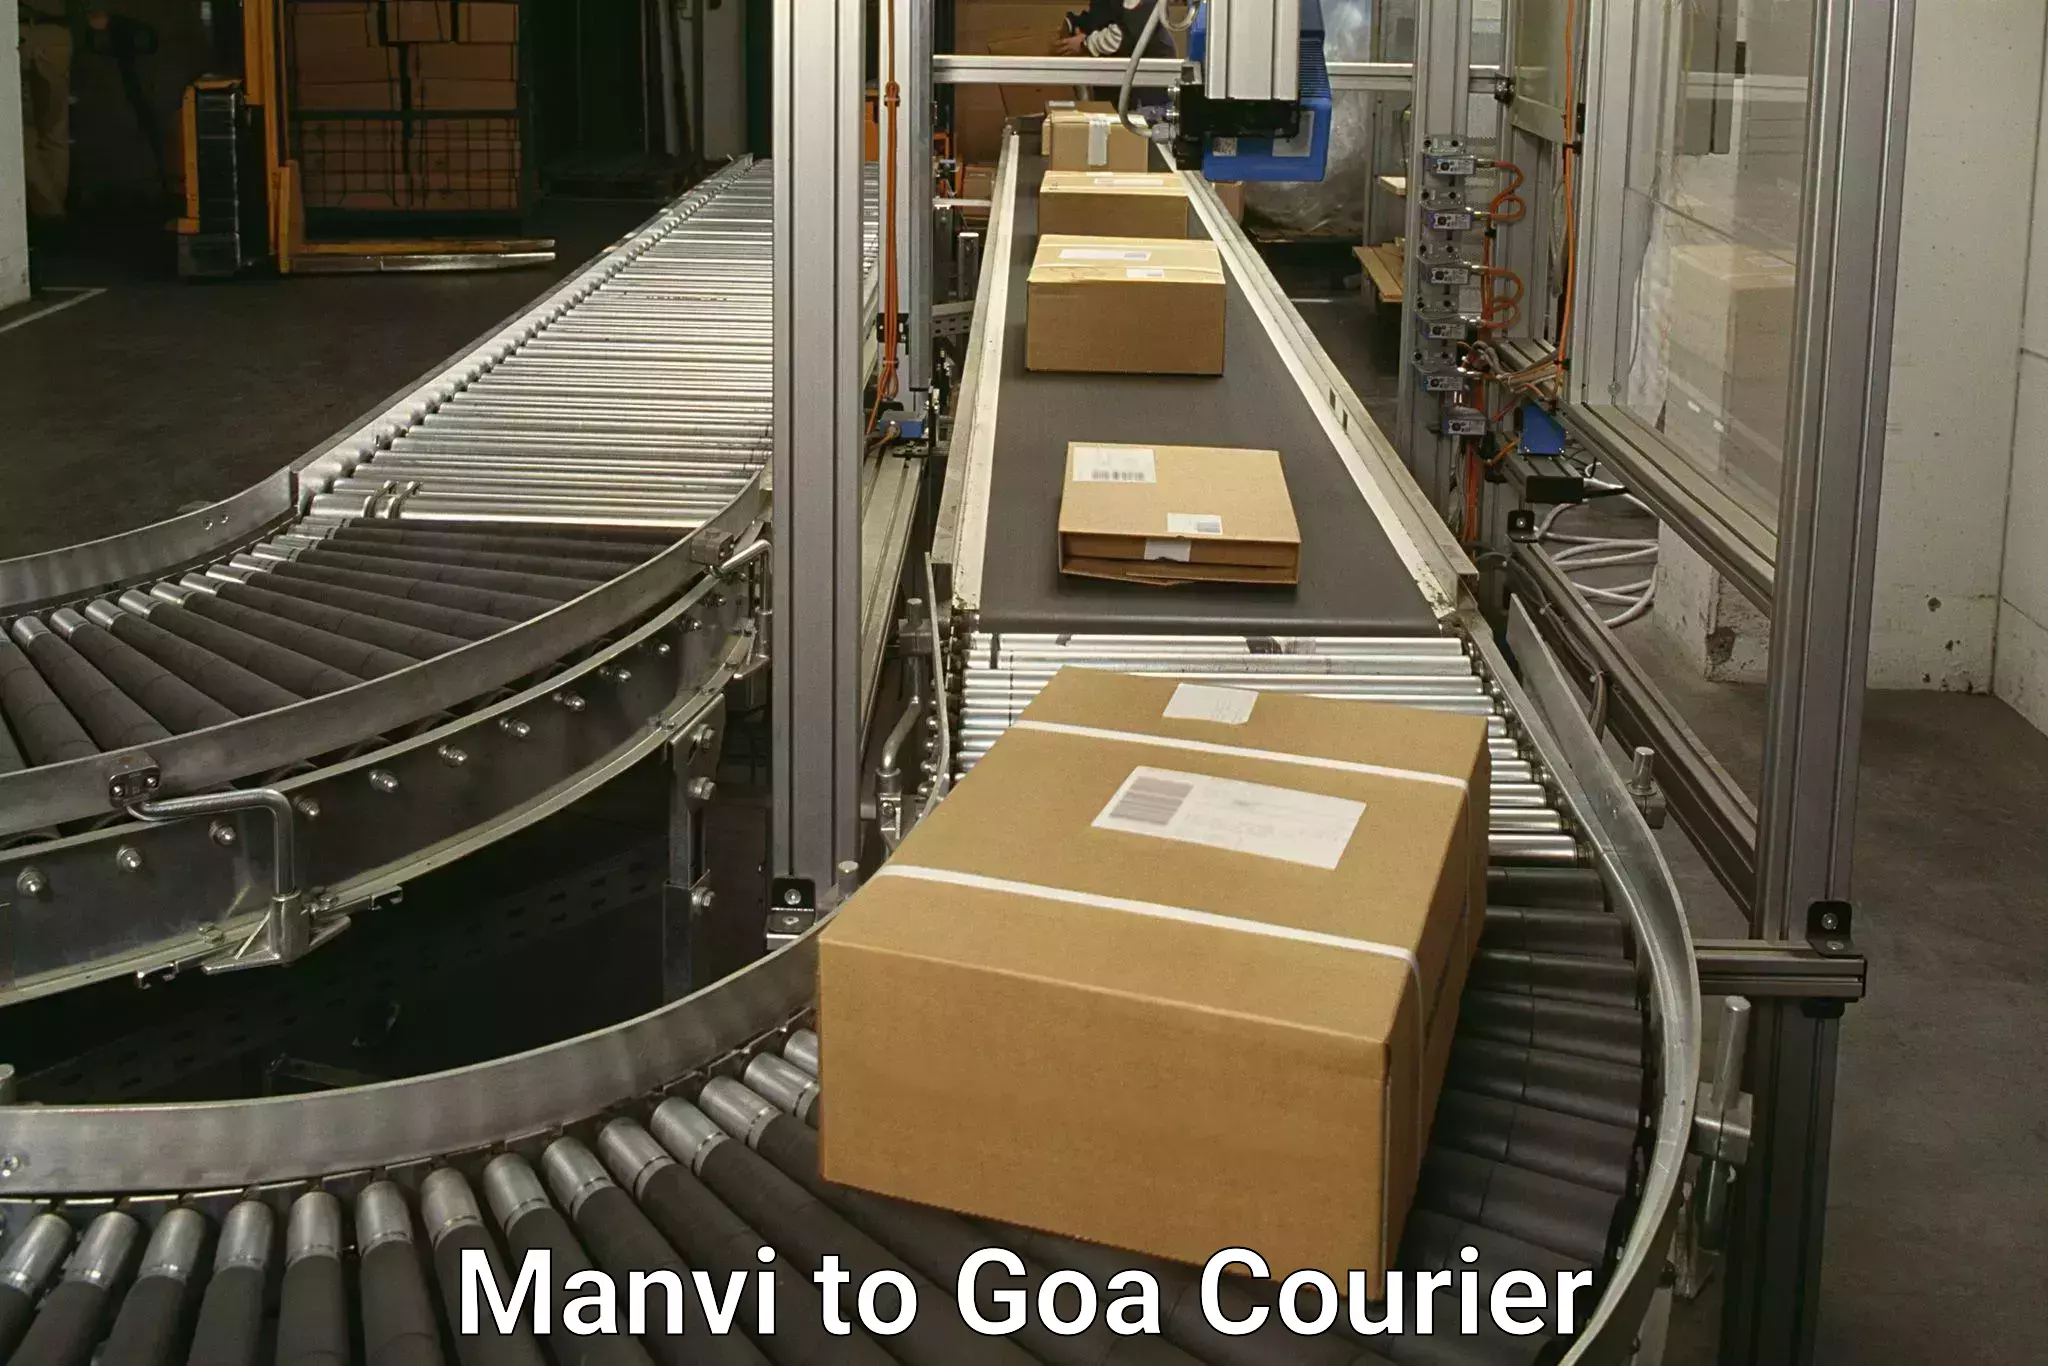 On-call courier service Manvi to Goa